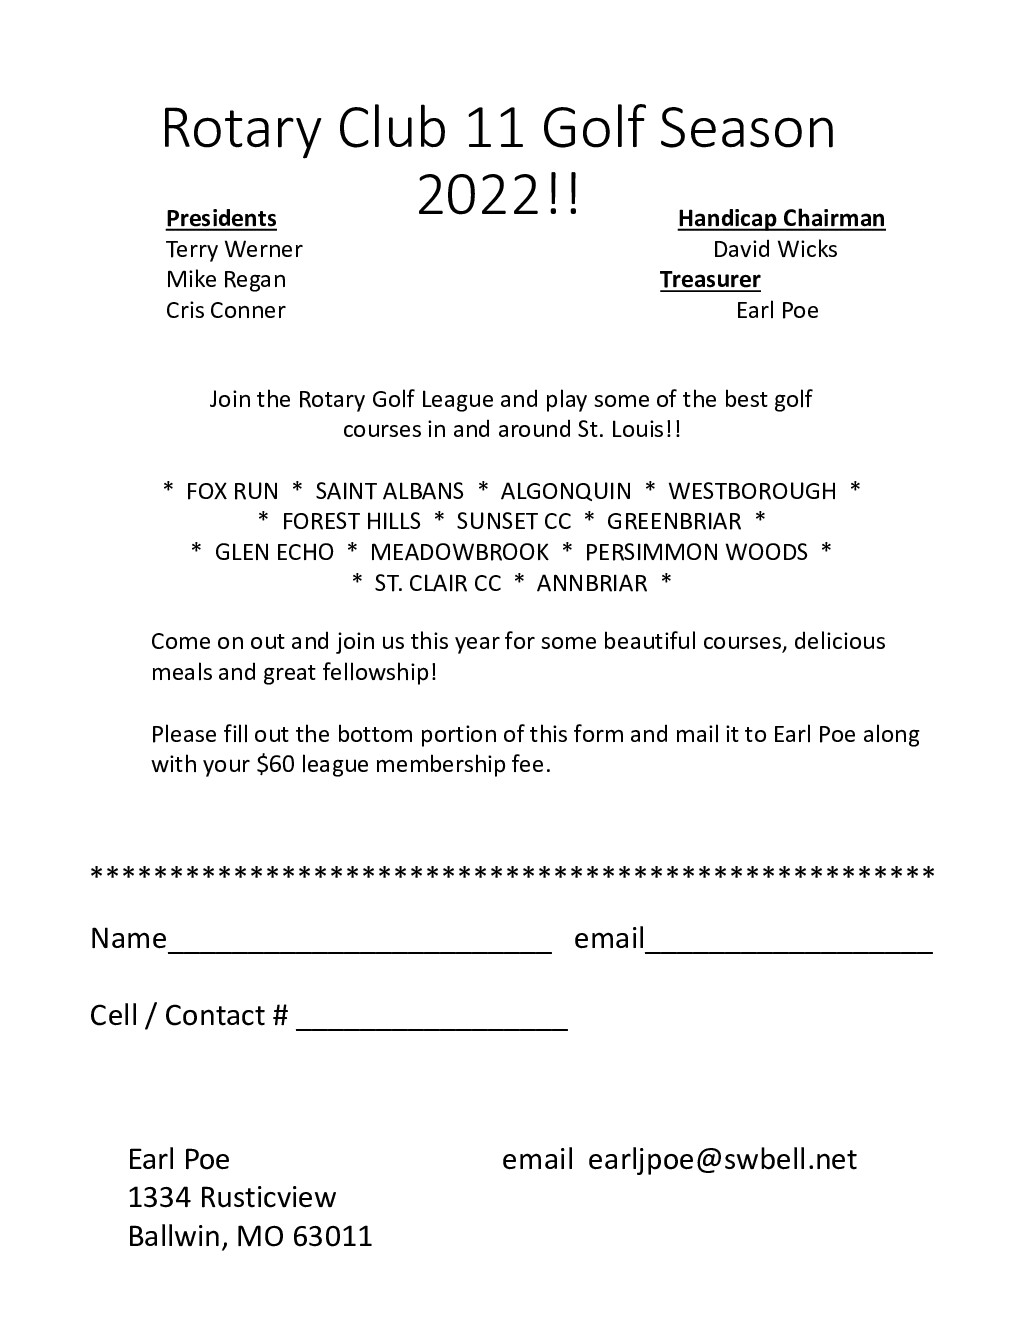 Rotary Golf League 2022 Dues flyer